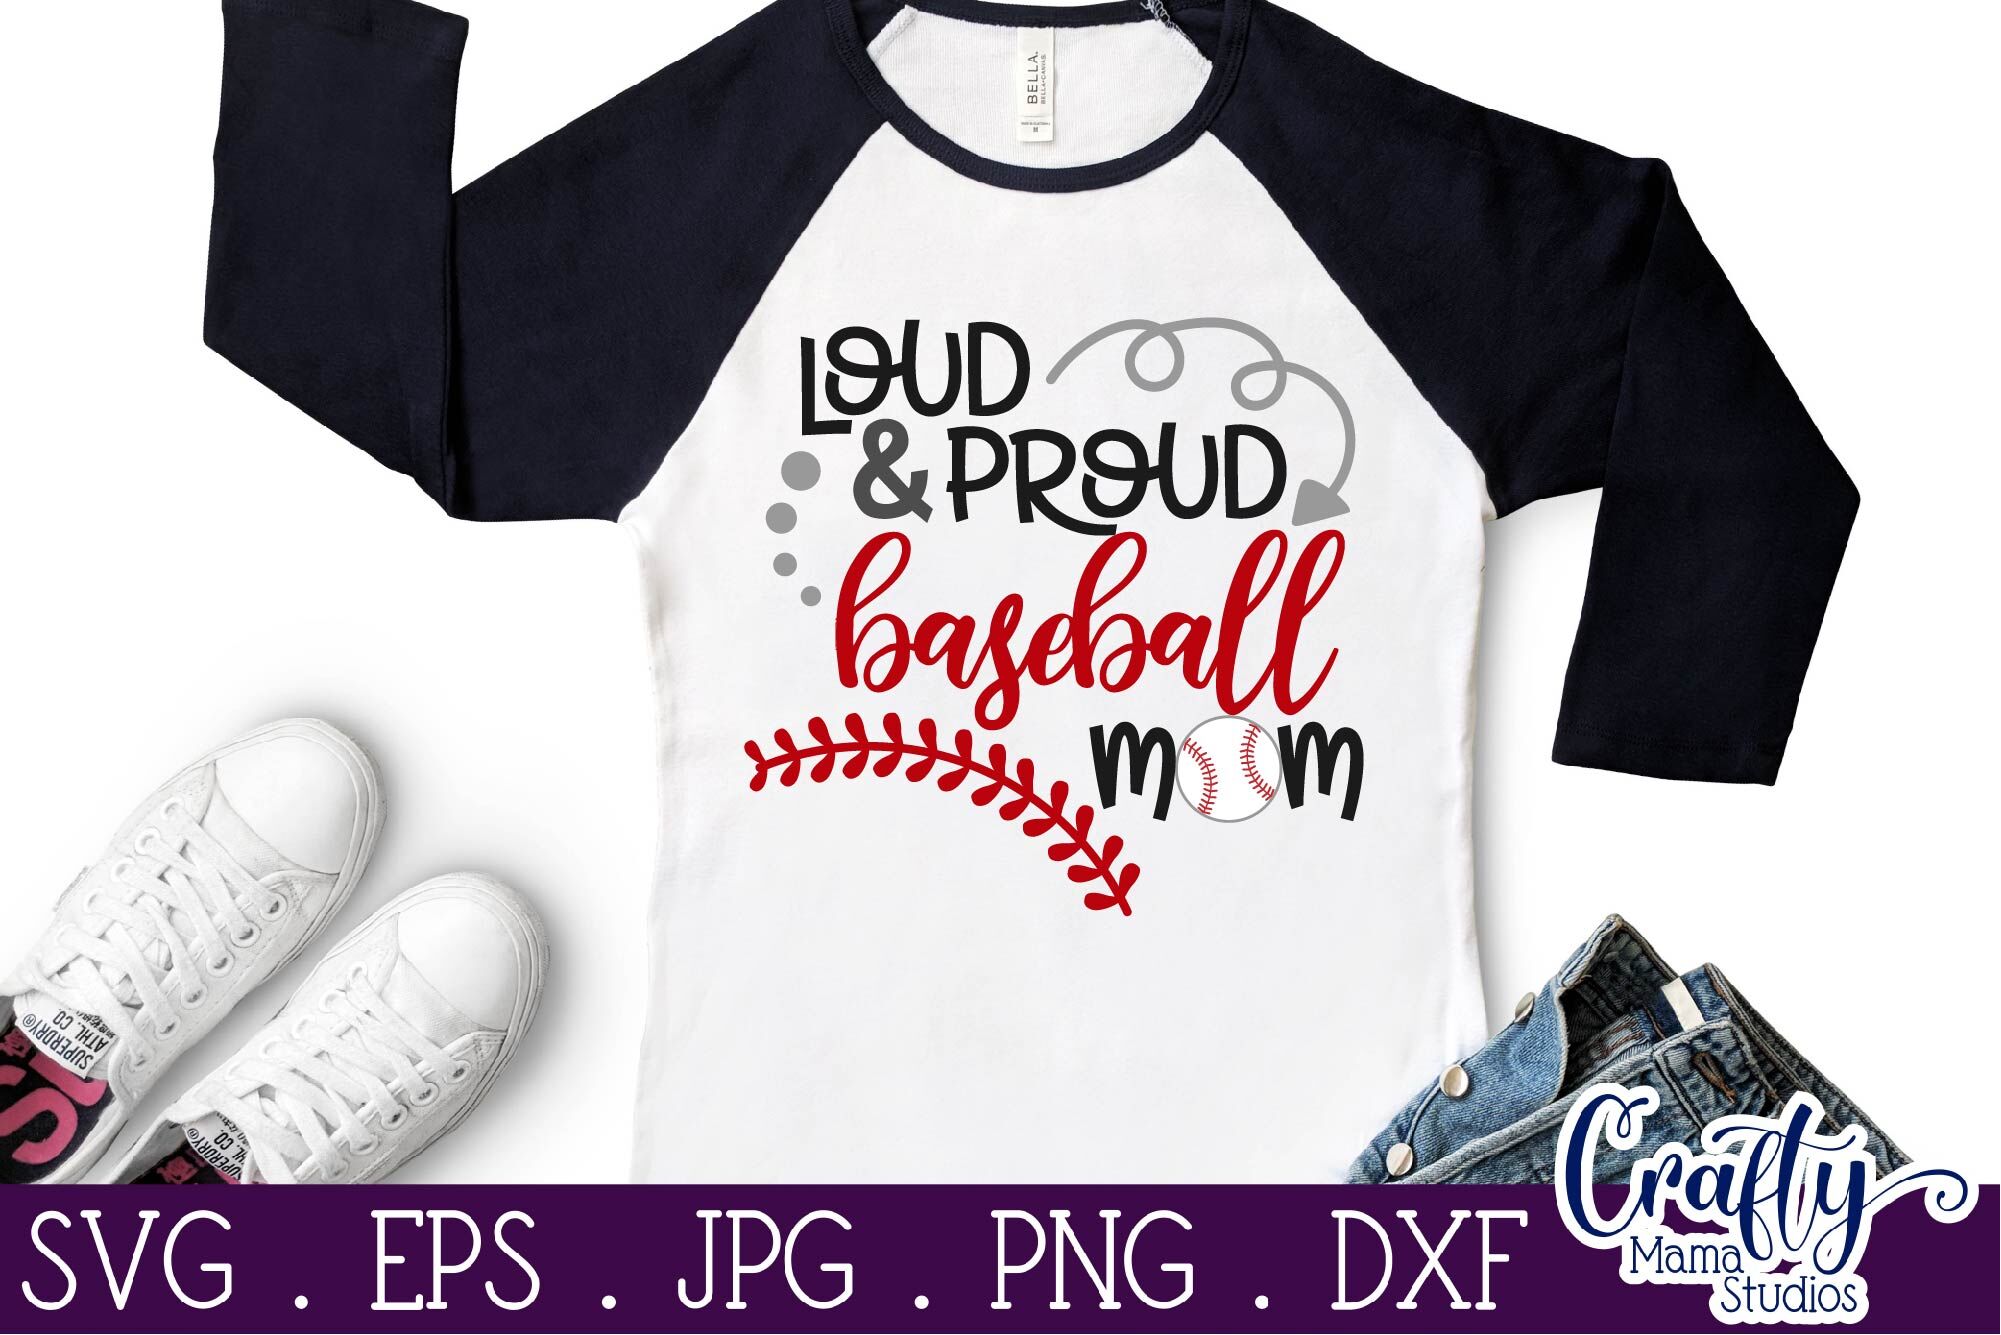 Loud and Proud Baseball Mama T-Shirt Adult Large